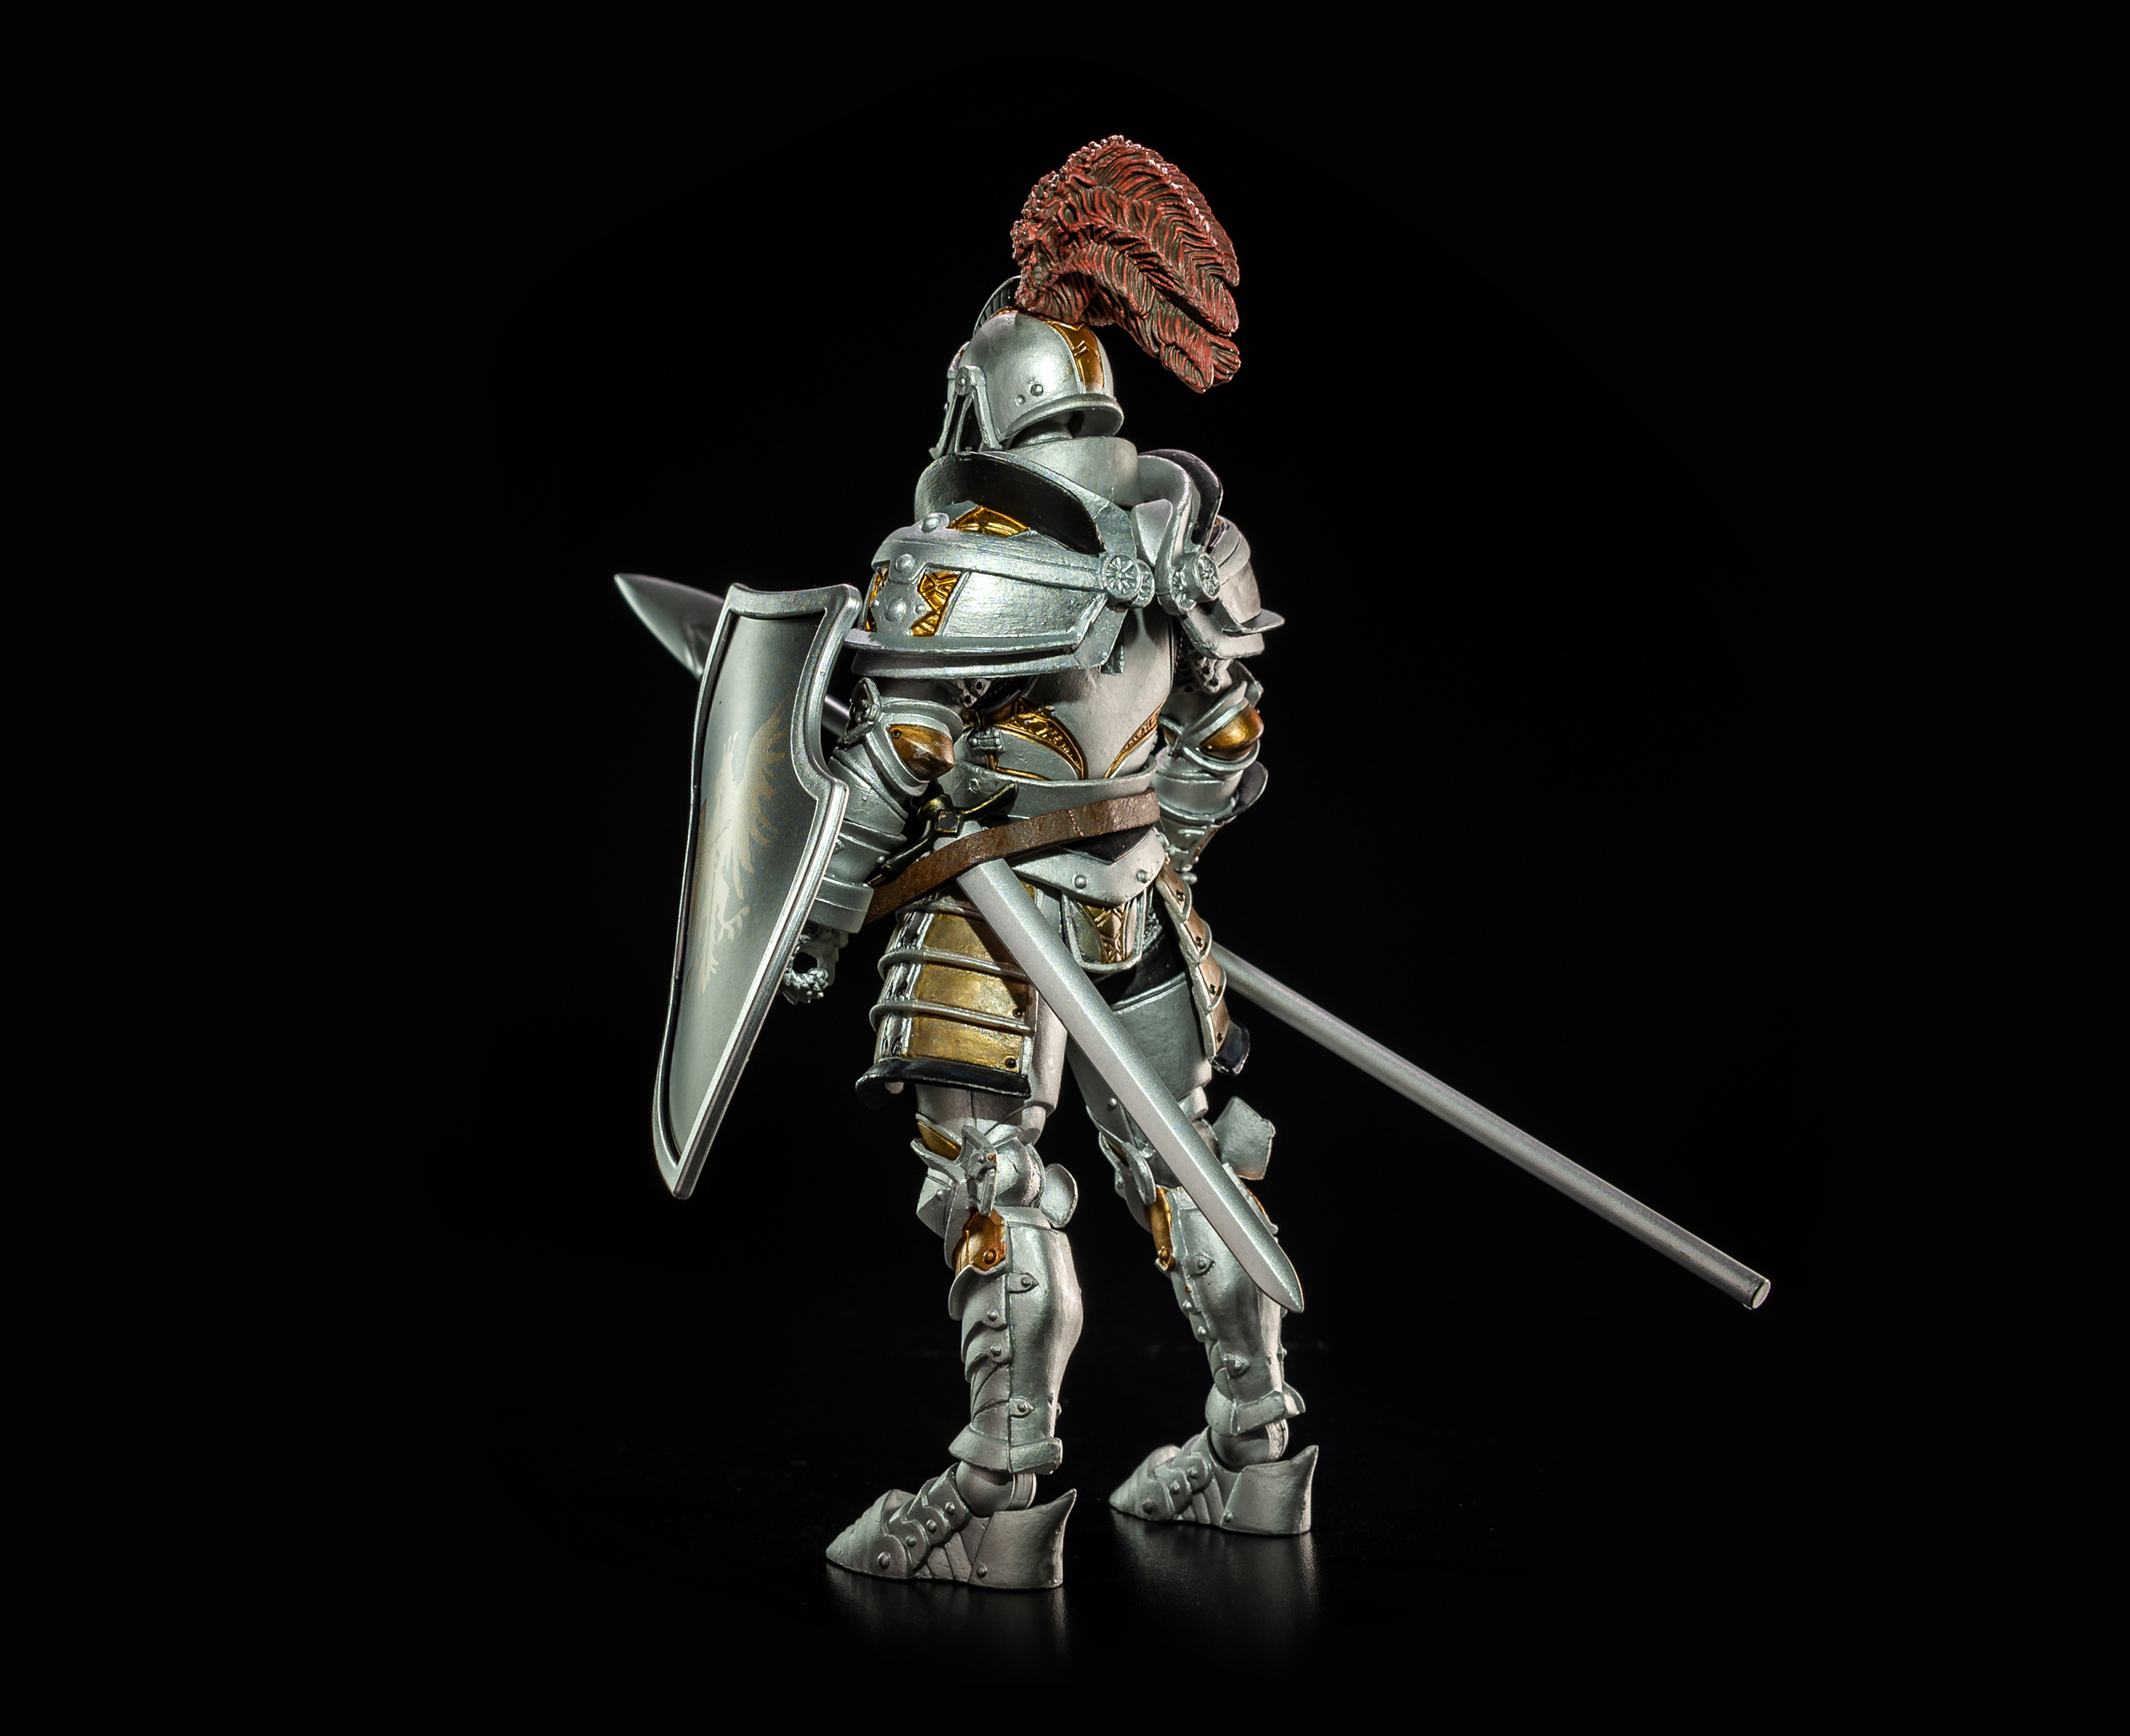 Sir Owain - Mythic Legions action figure from Four Horsemen Studios